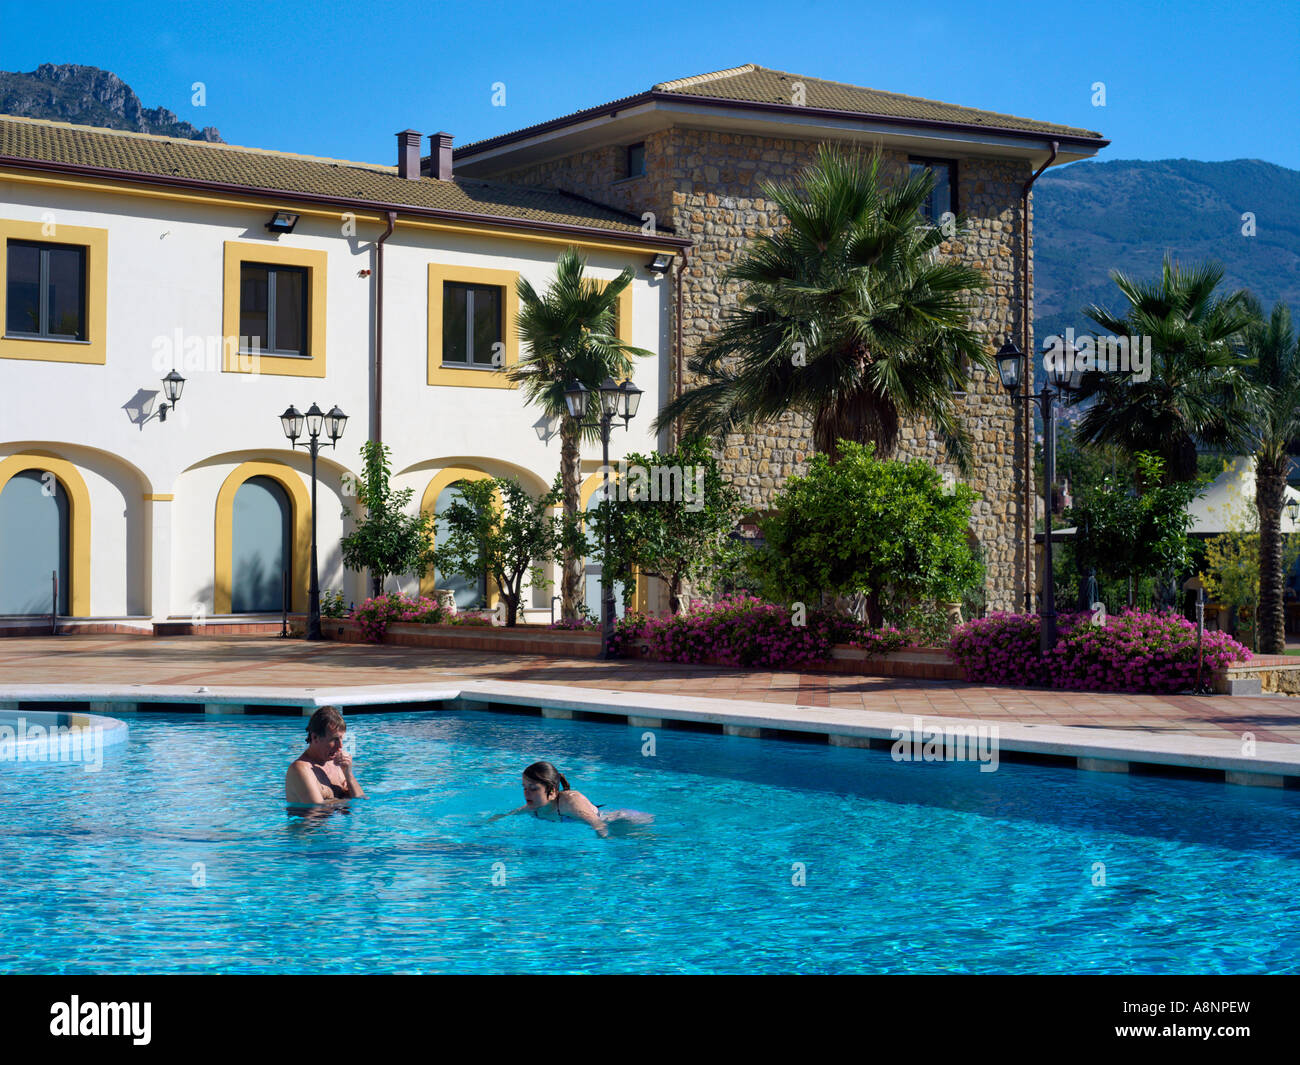 Palermo Sicily Italy Genoardo Park Hotel Swimming Pool People Swimming Stock Photo